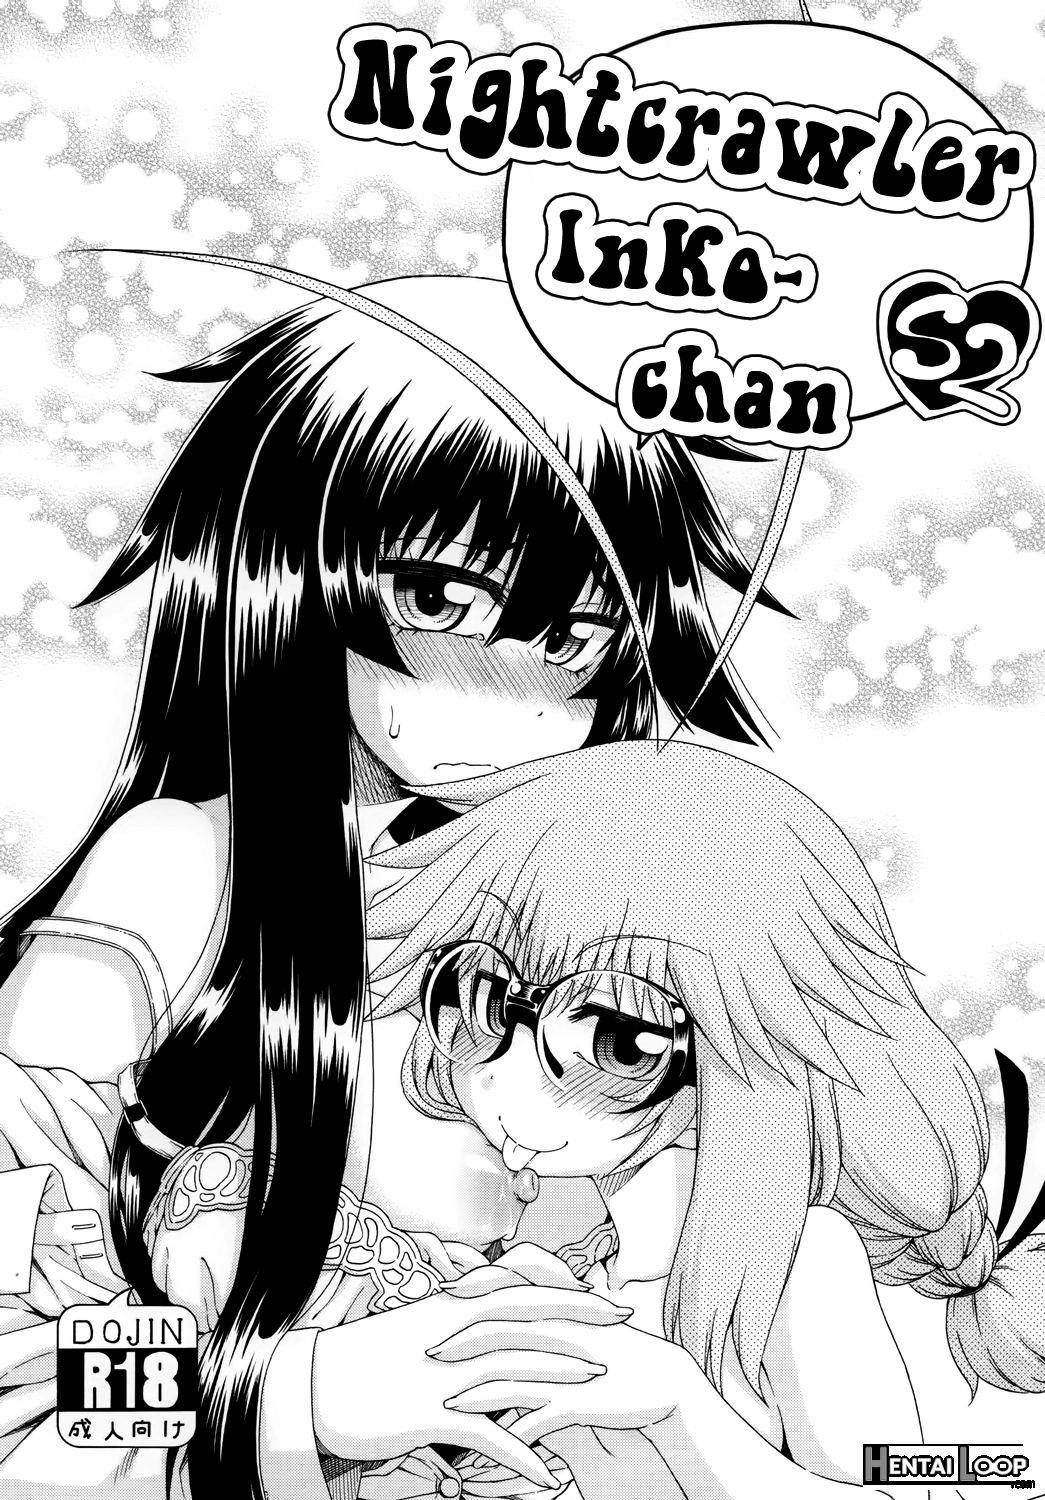 Yobae Inko-chan S2 page 1